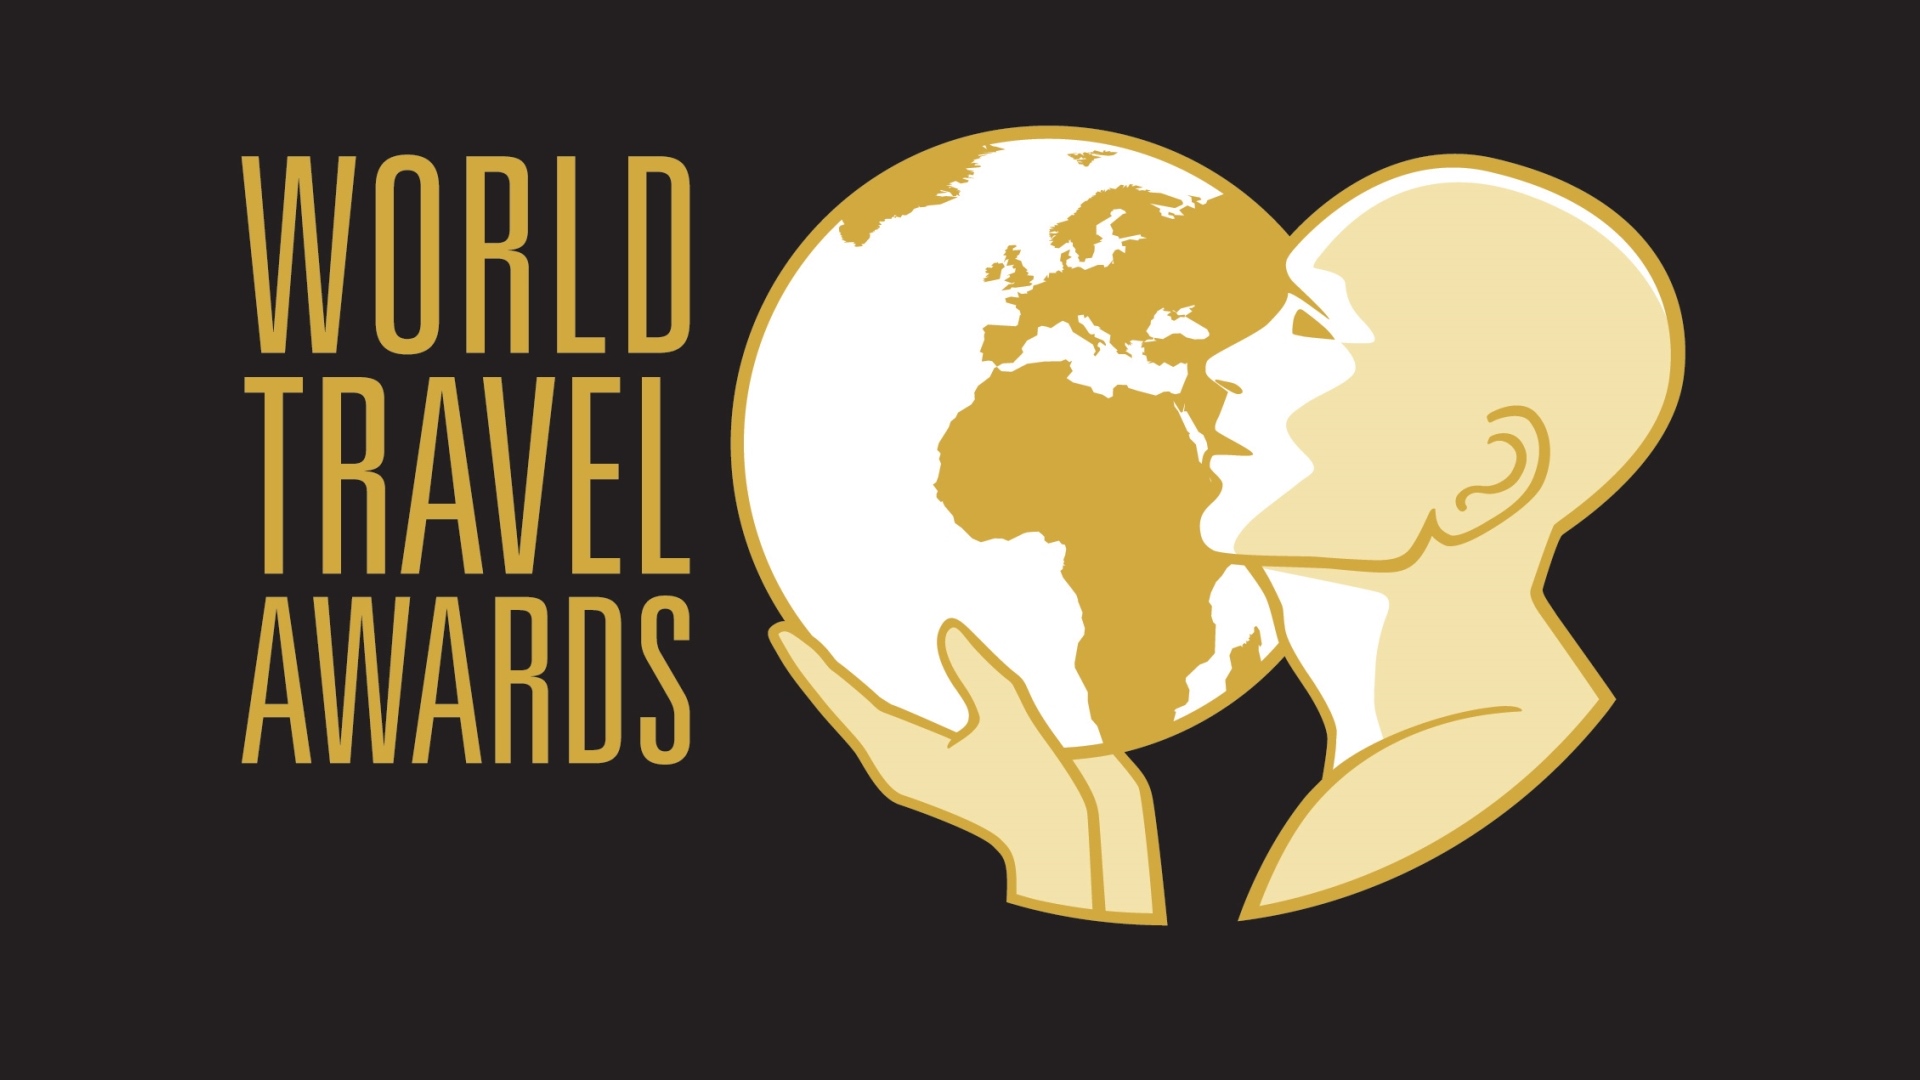 who owns world travel awards